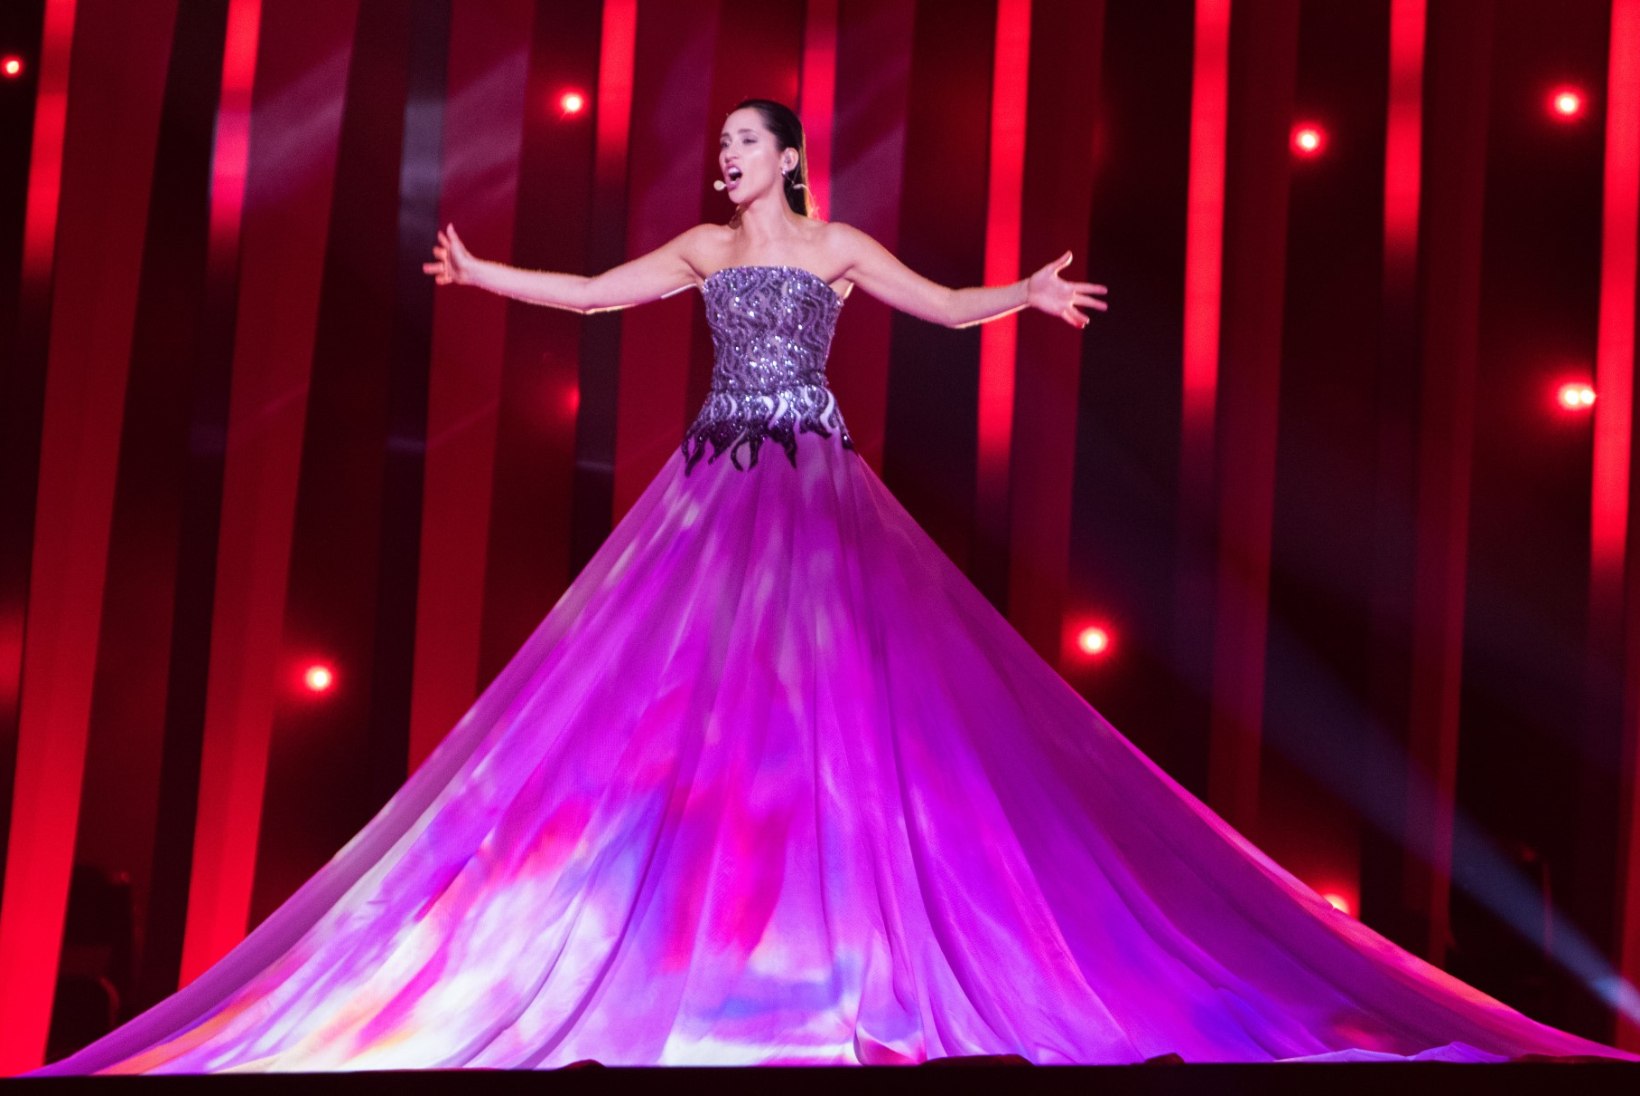 Kas Elina laulab Eurovisioni finaalis "La forzat" mitmes keeles?